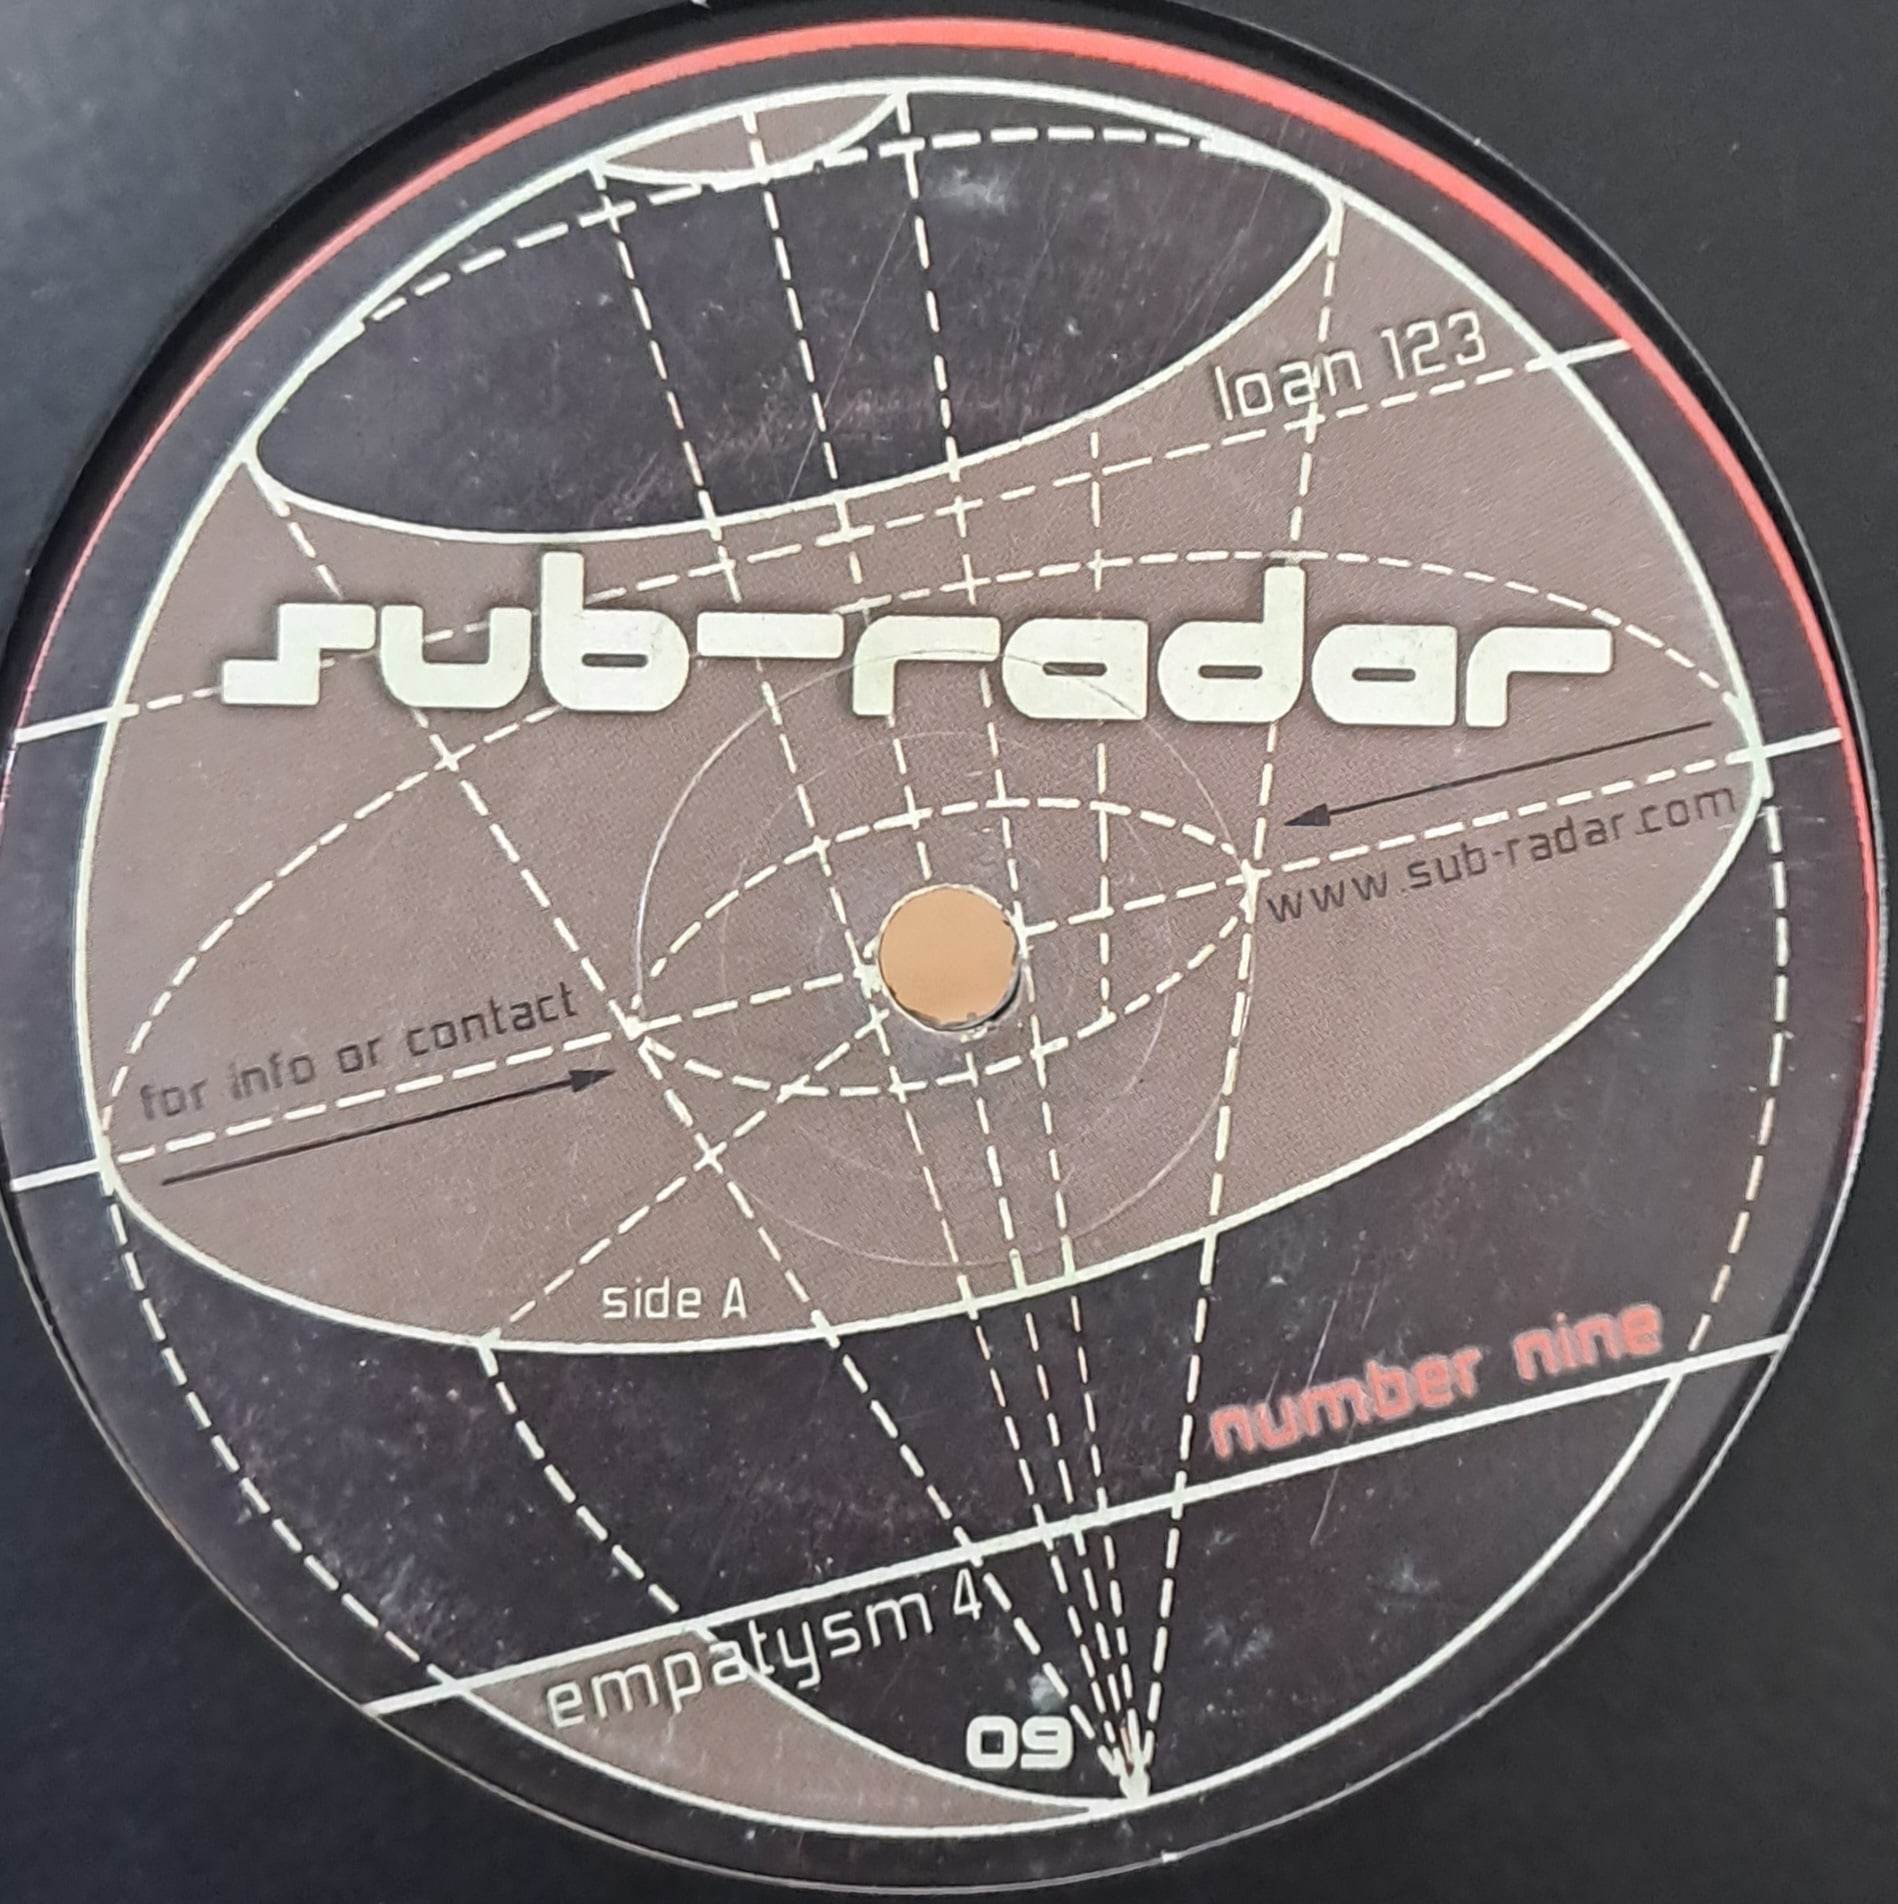 Sub-Radar Records 09 - vinyle freetekno